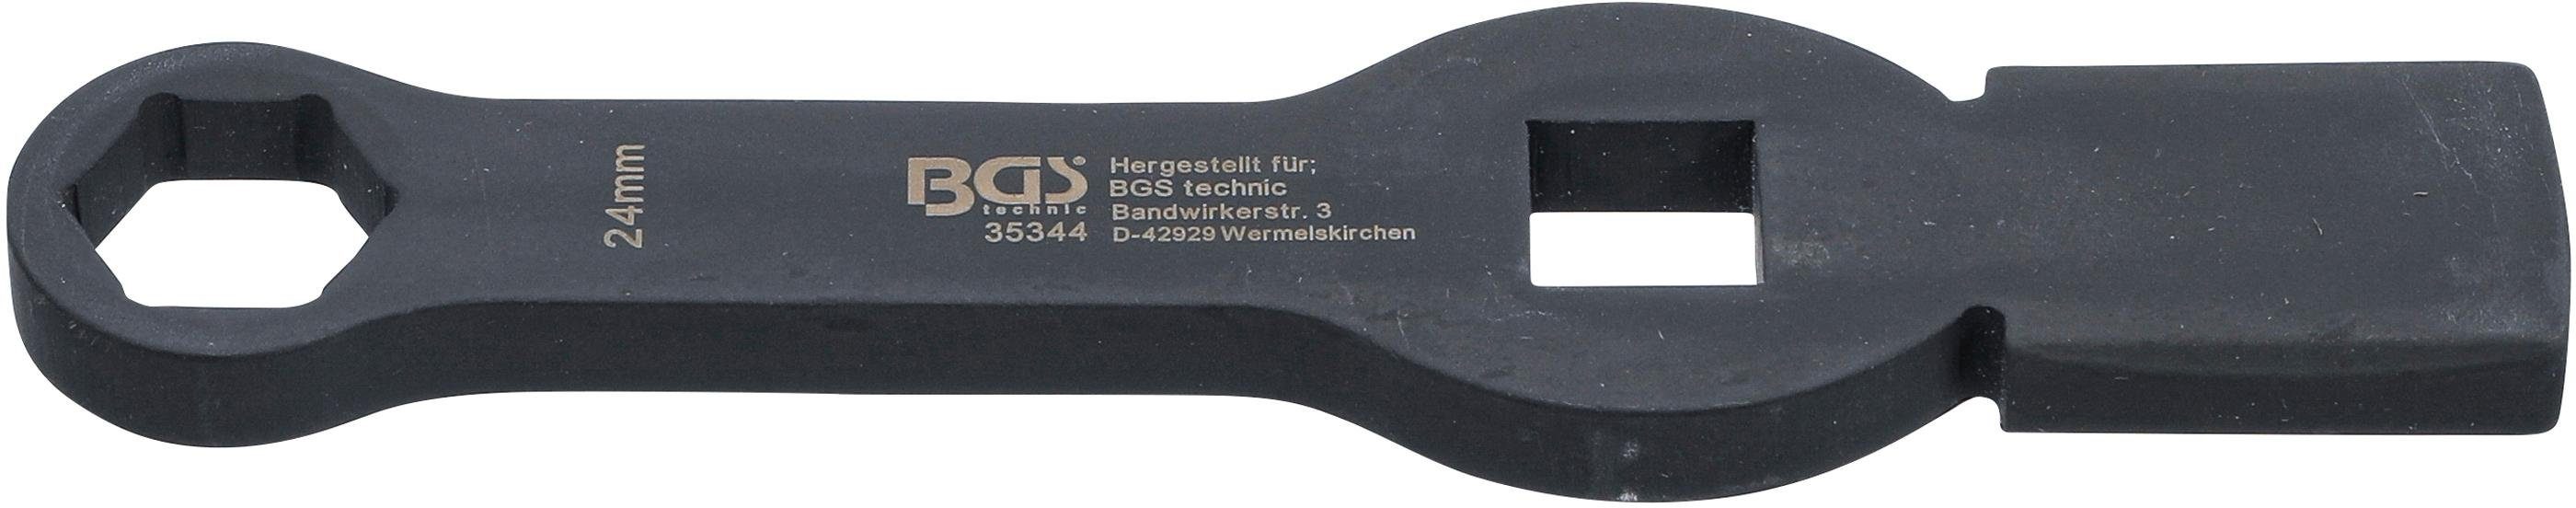 BGS technic Ringschlüssel Schlag-Ringschlüssel, Sechskant, mit 2 Schlagflächen, SW 24 mm